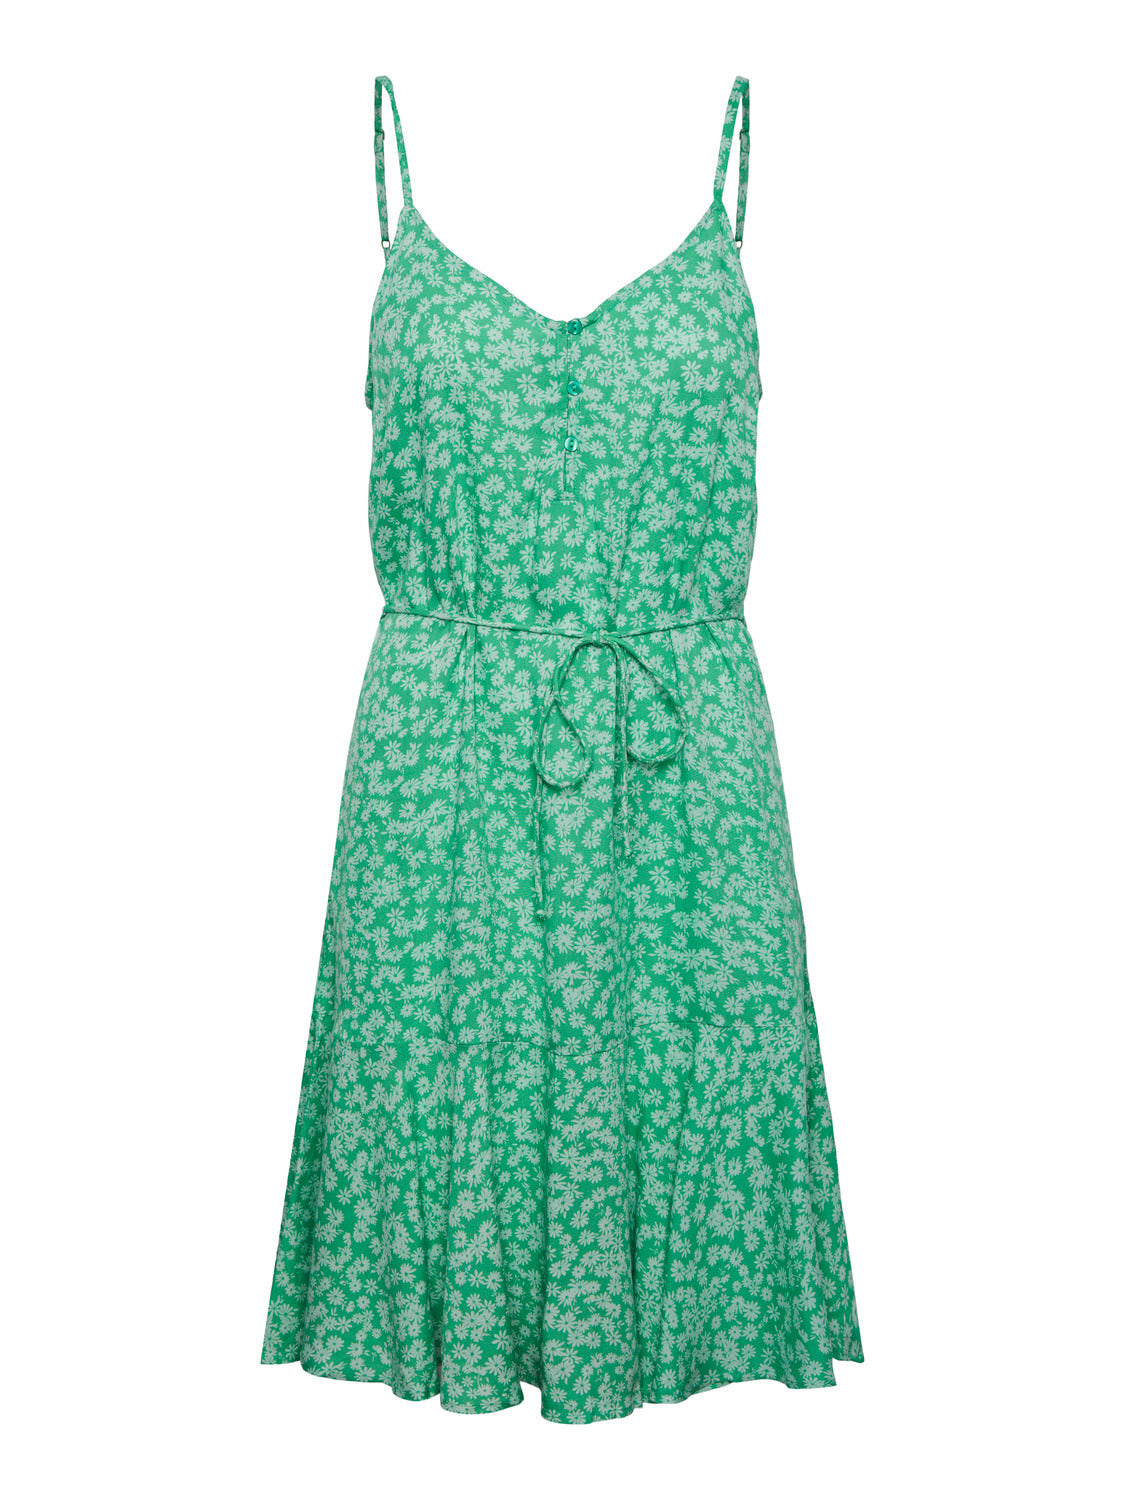 PCNYA Dress - Irish Green